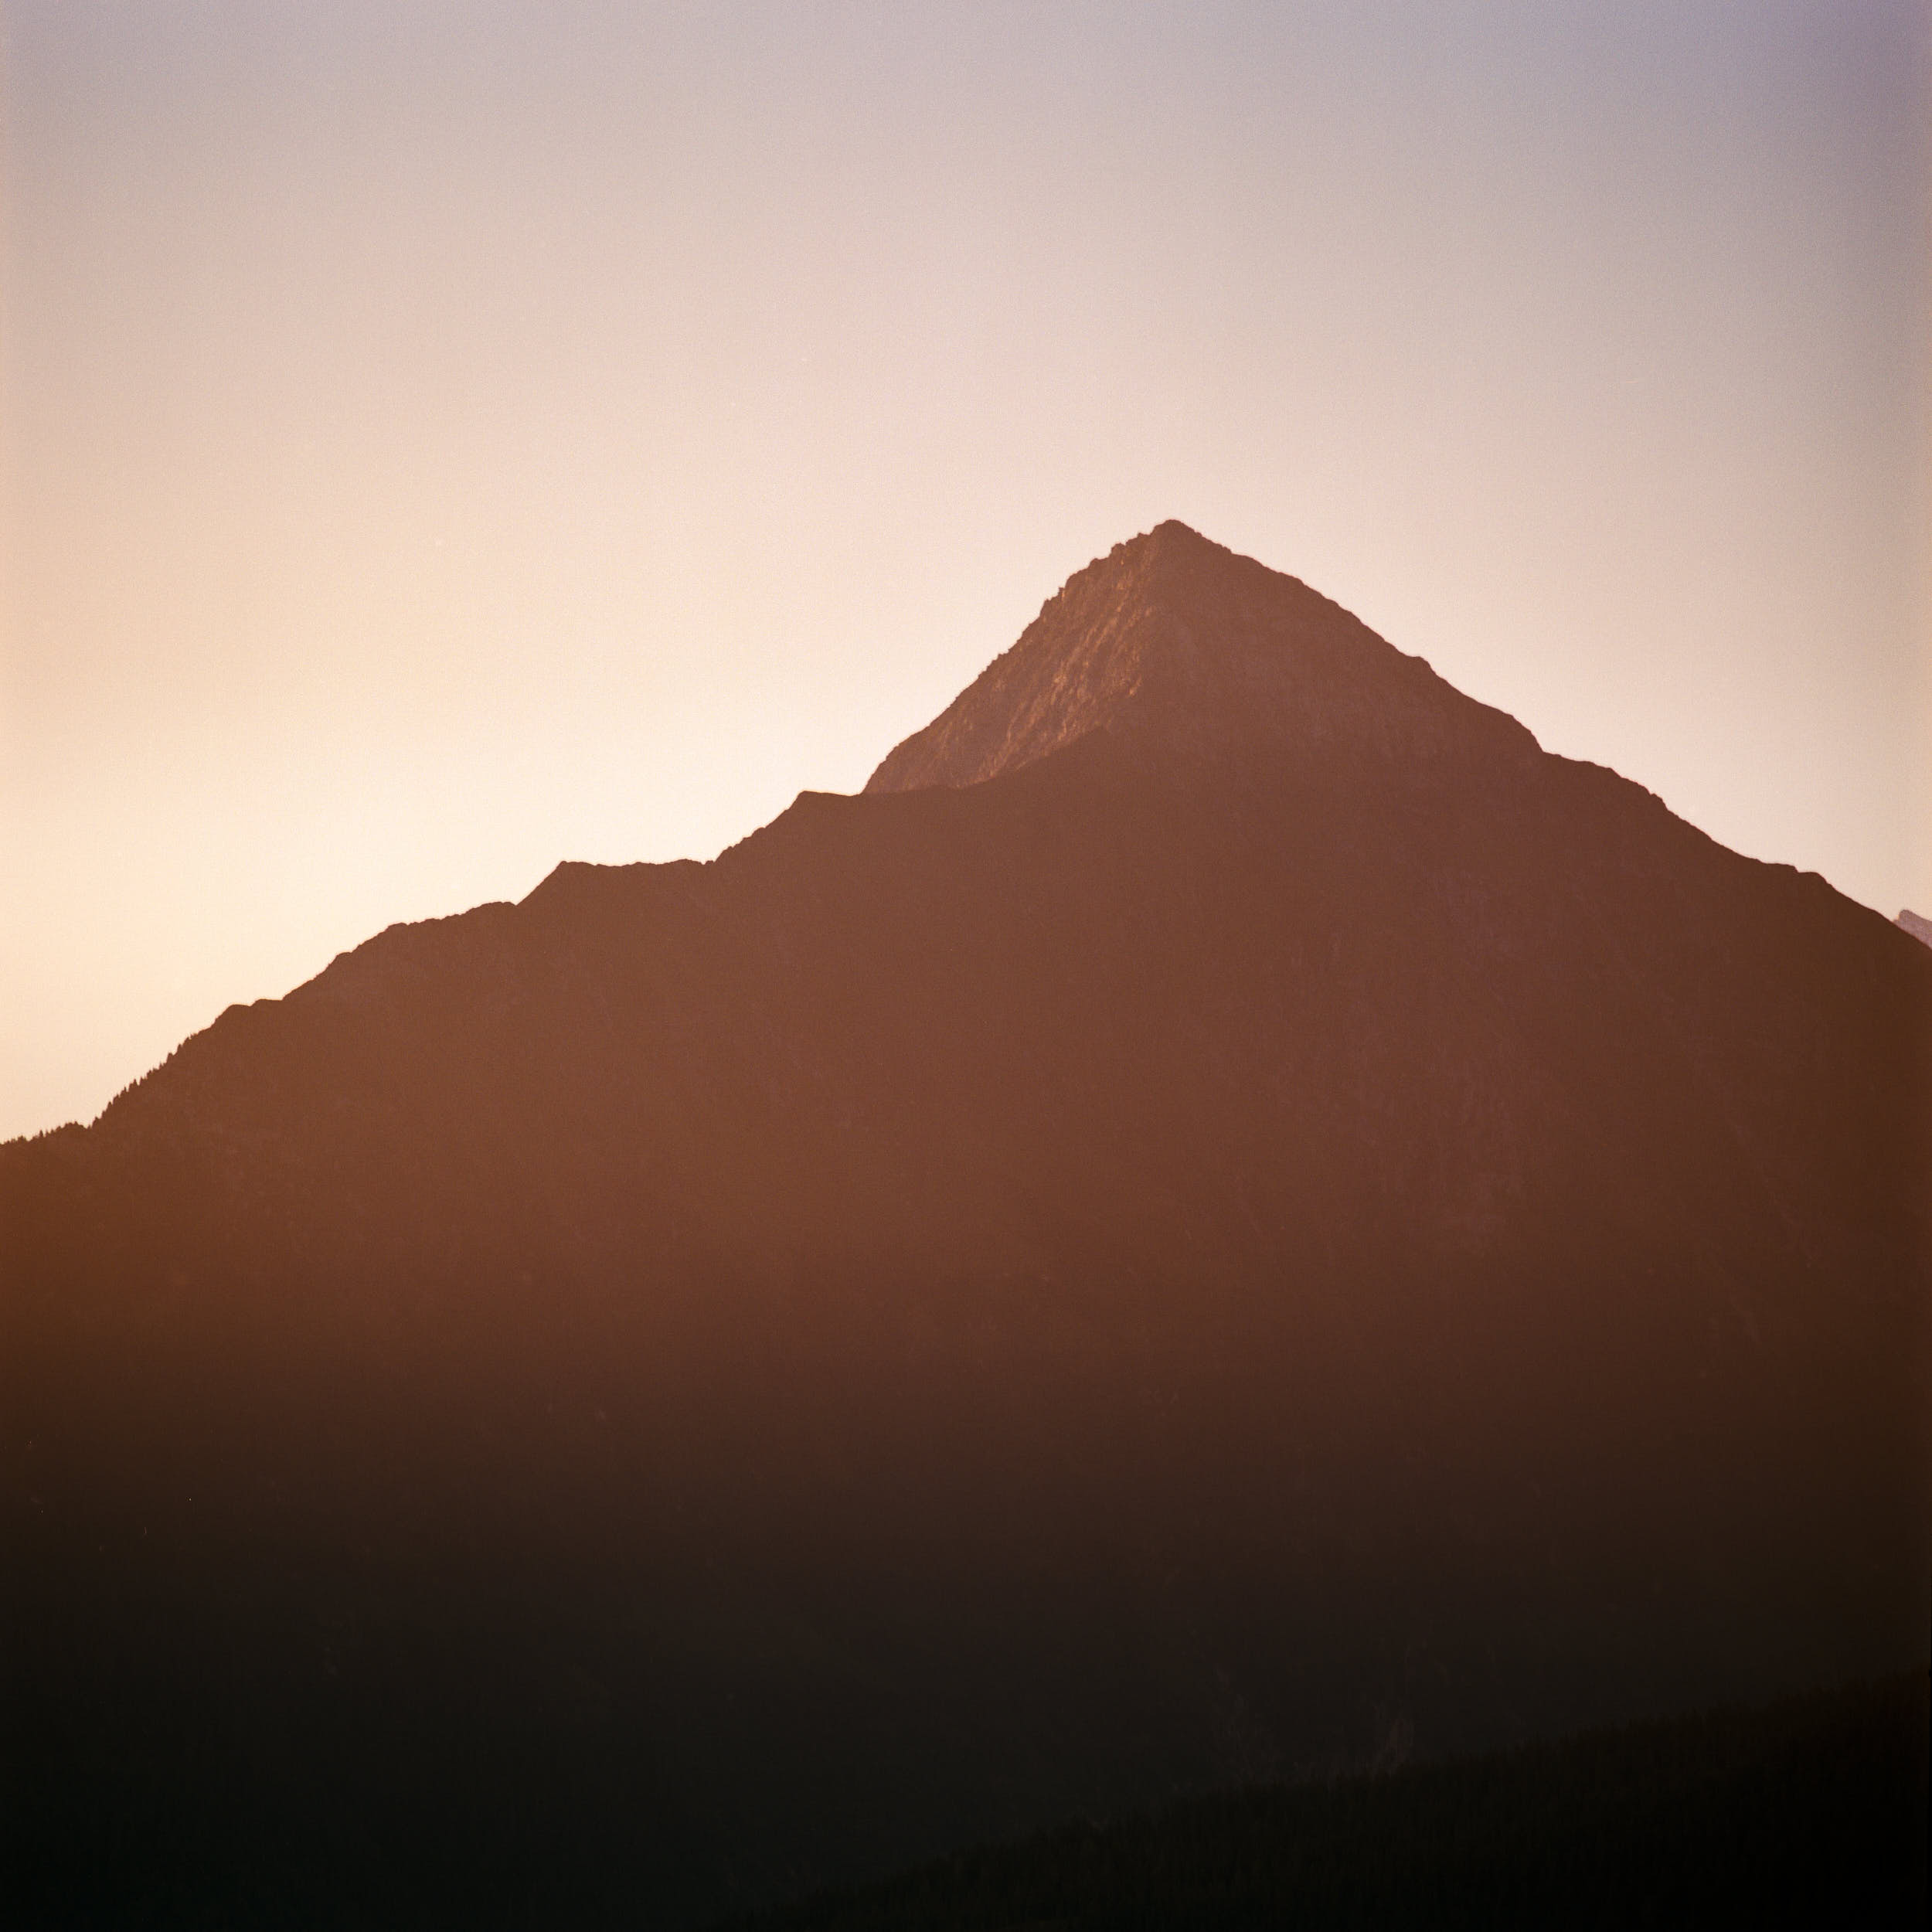 First sunlight hitting the top of alpine peaks. Shot on medium format color film.